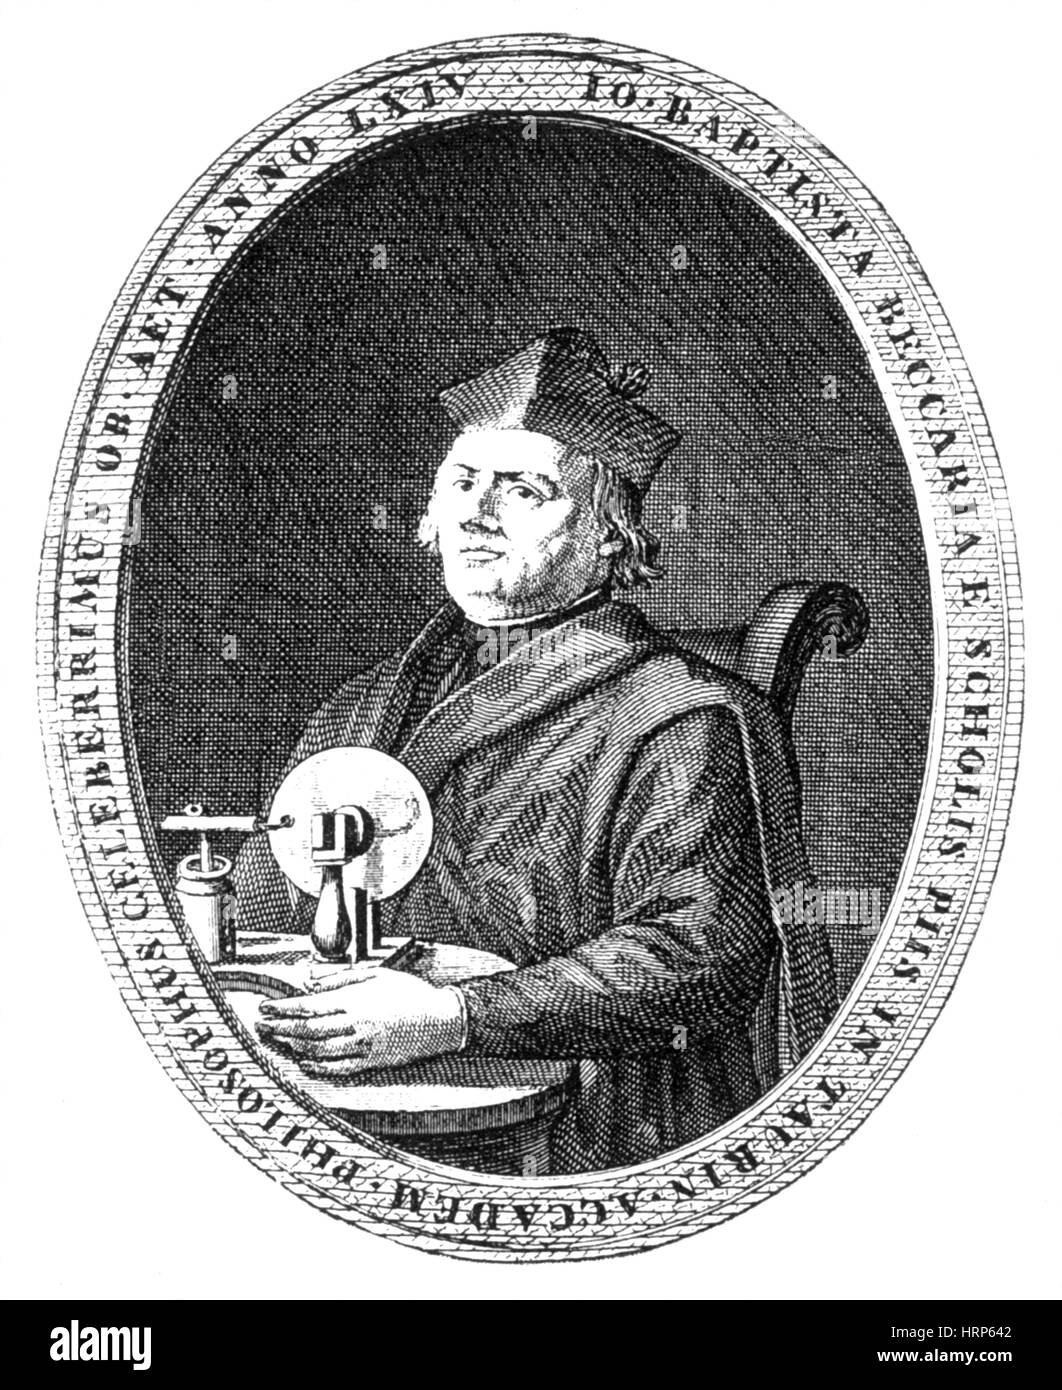 Giovanni Battista Beccaria, physicien italien Banque D'Images